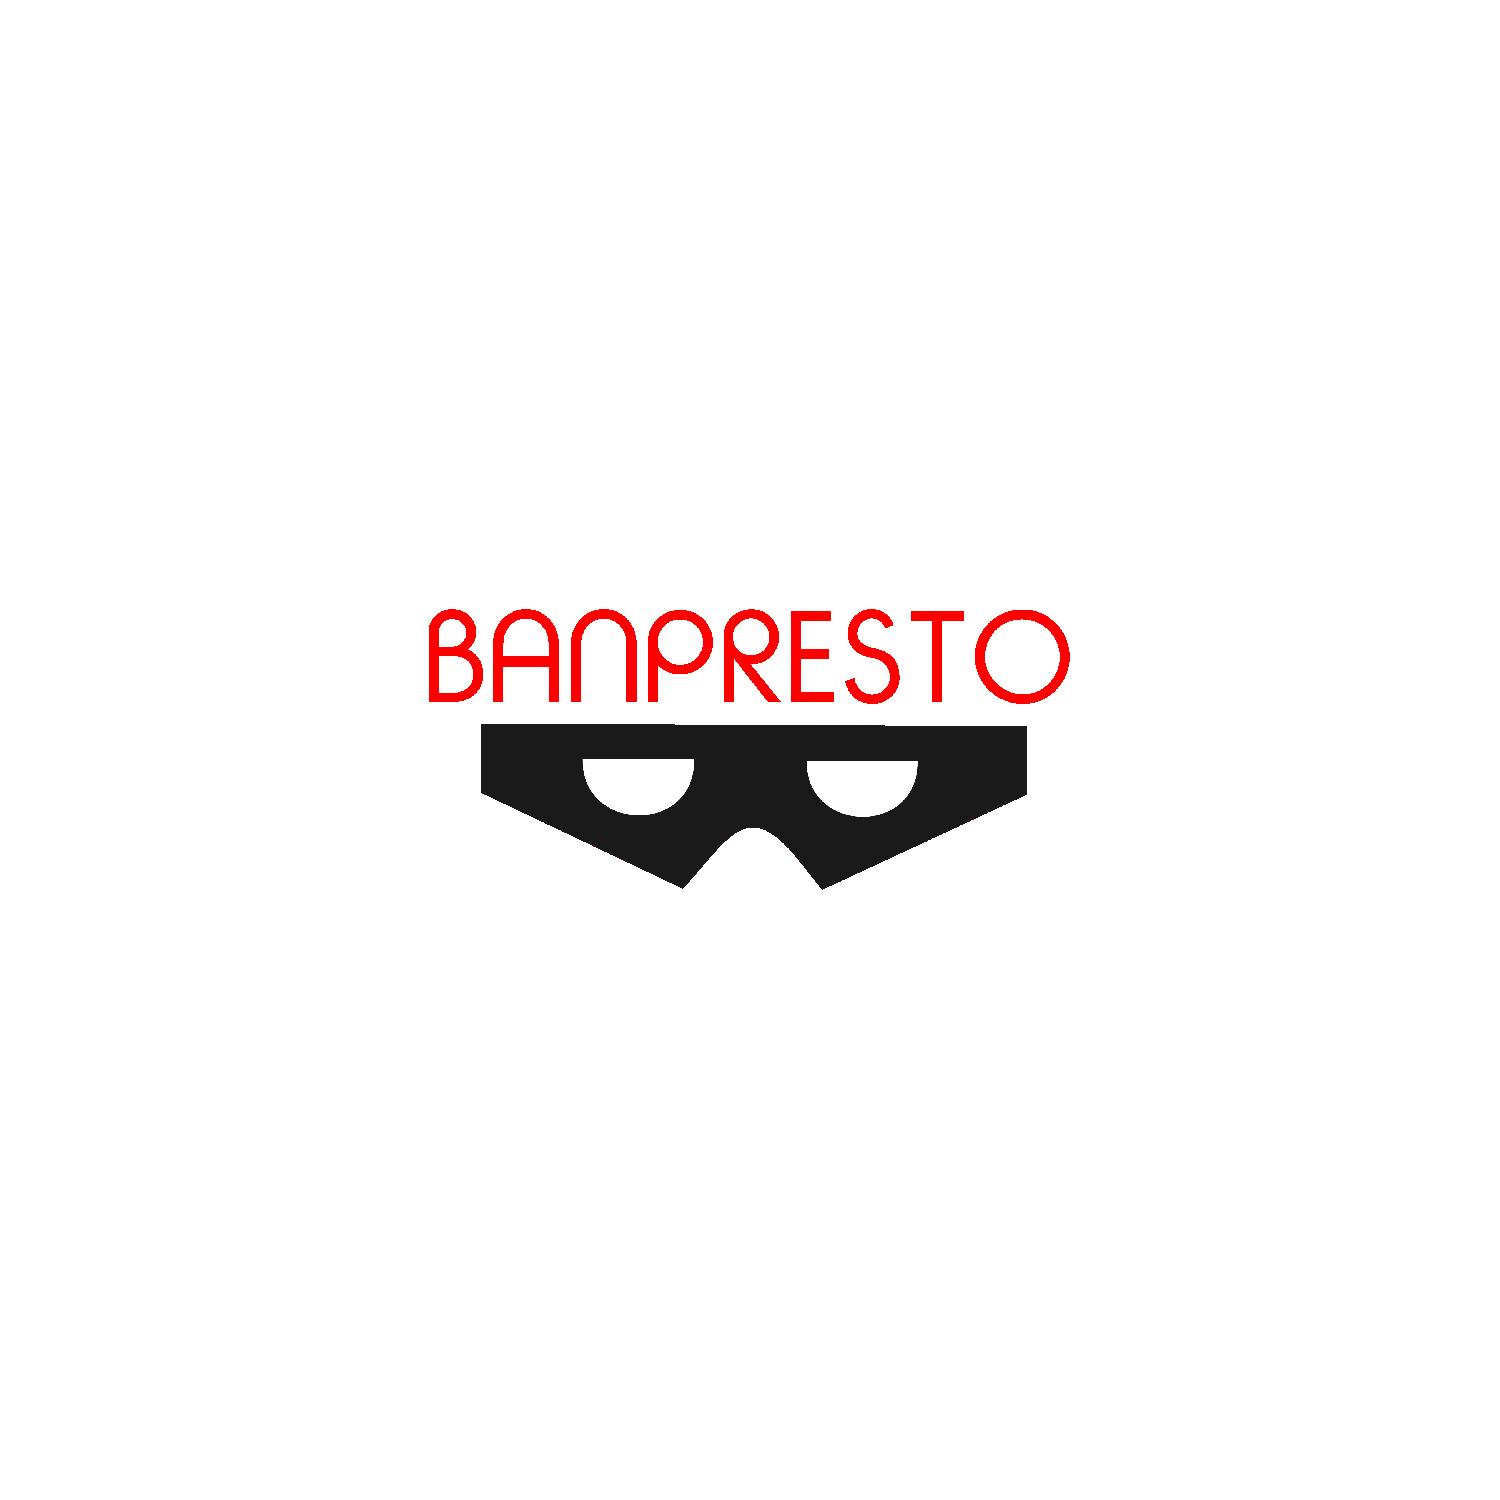 Banpresto - Haiku POP